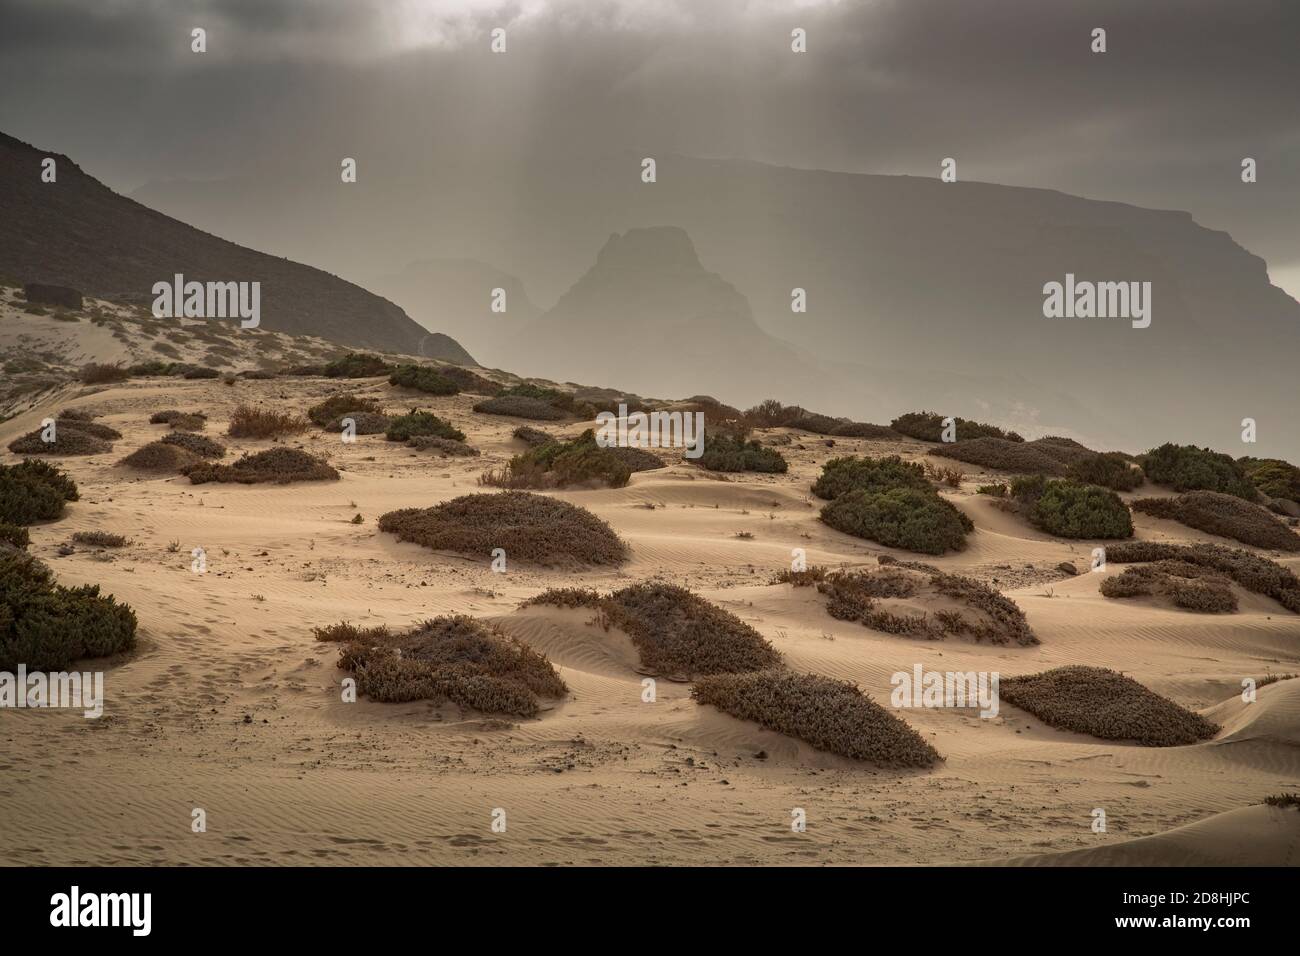 Desolate coastal, mountainous landscape on the island of São Vicente, Cape Verde. Stock Photo